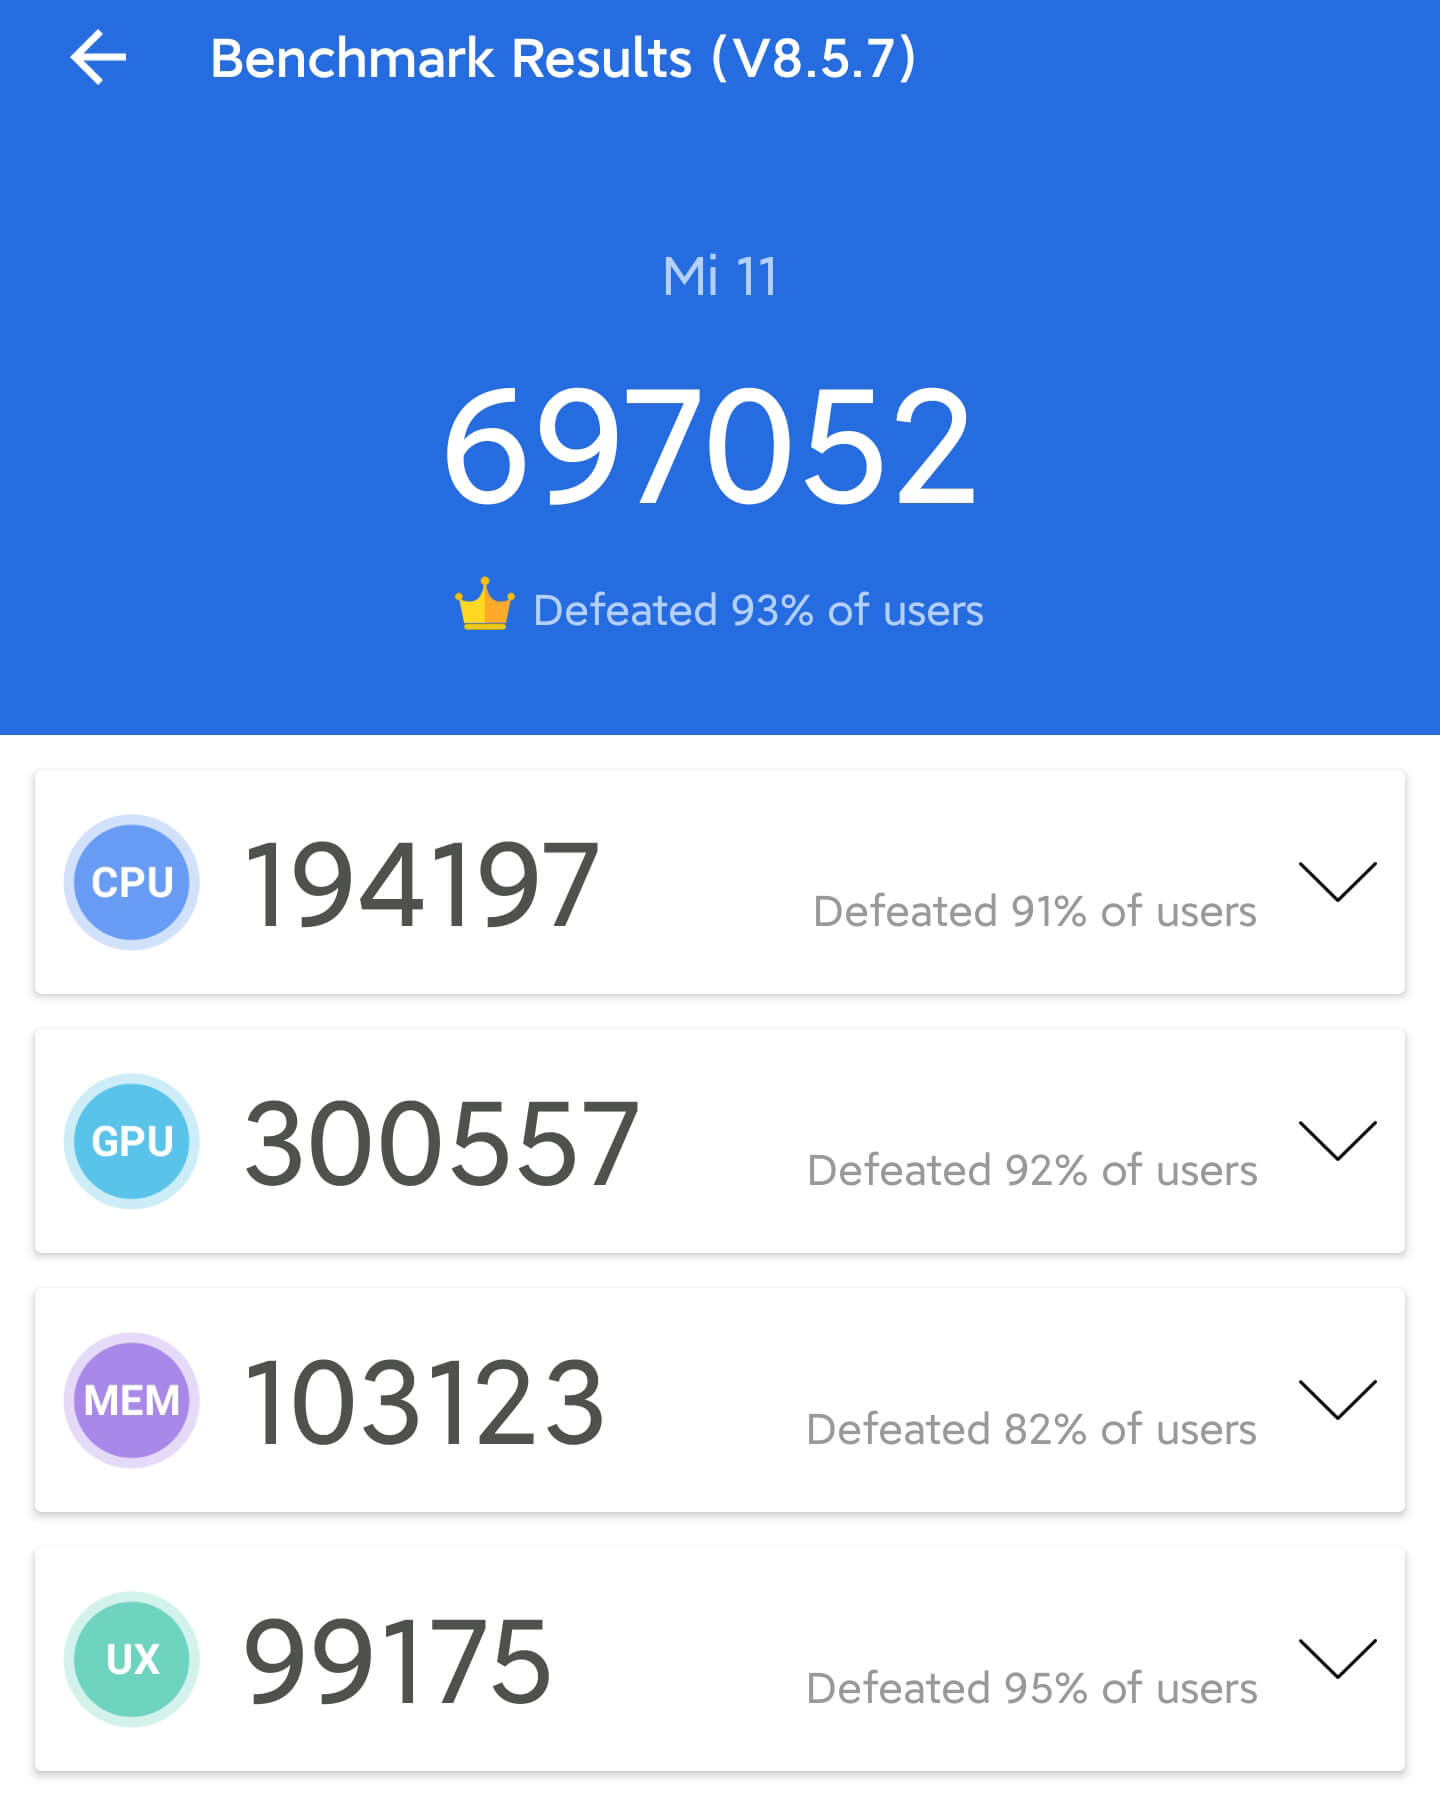 Xiaomi Mi 11のAntutuベンチマークスコア計測1回目は697052